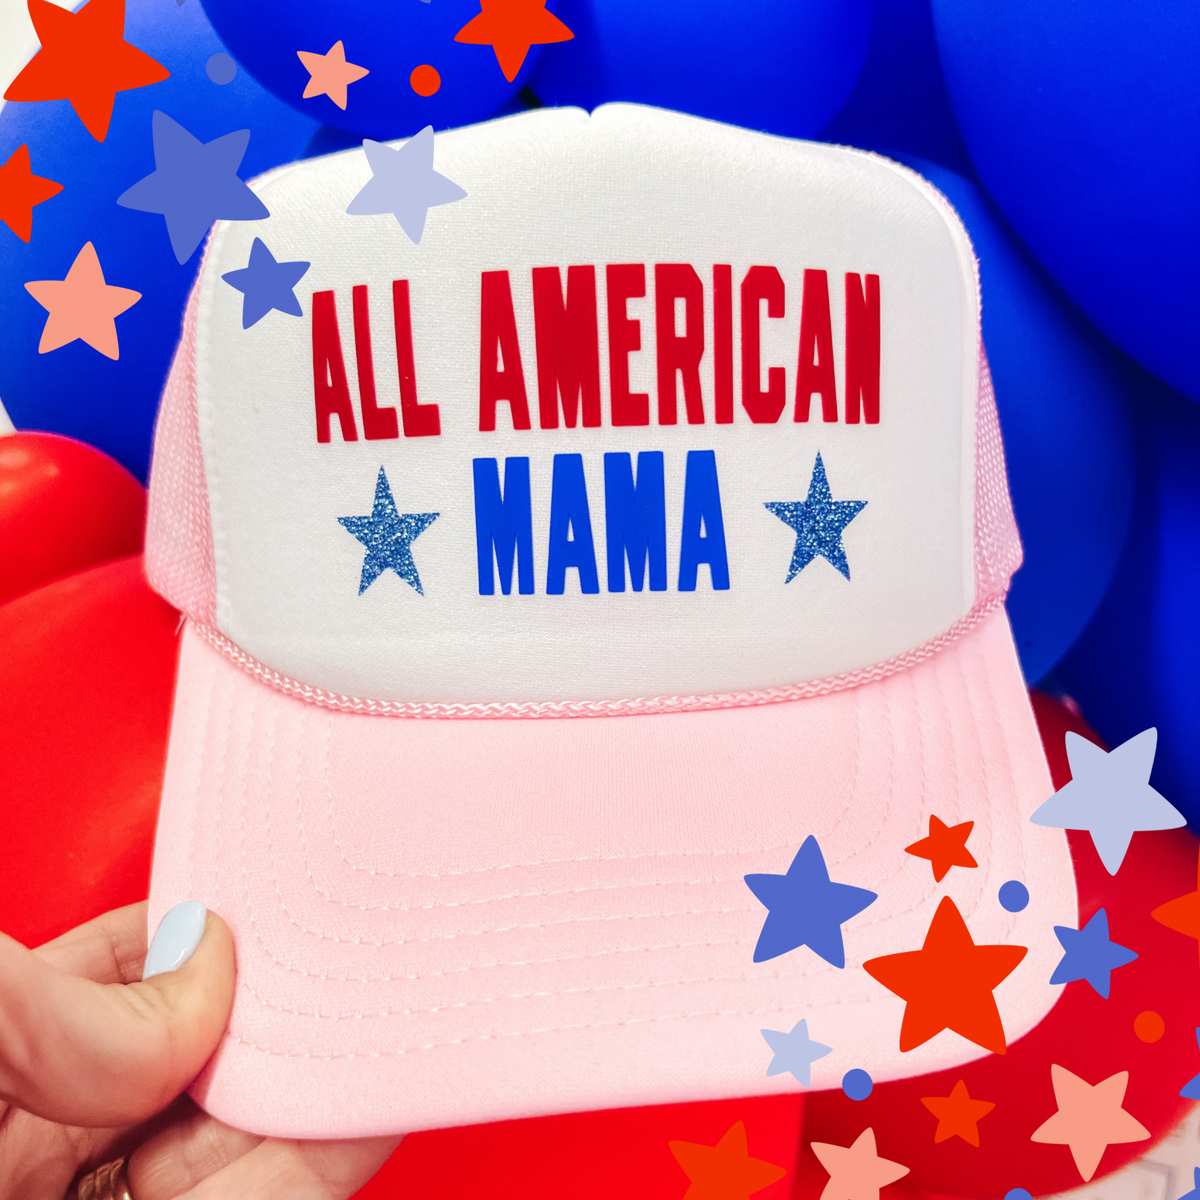 All American Mama Trucker Hat